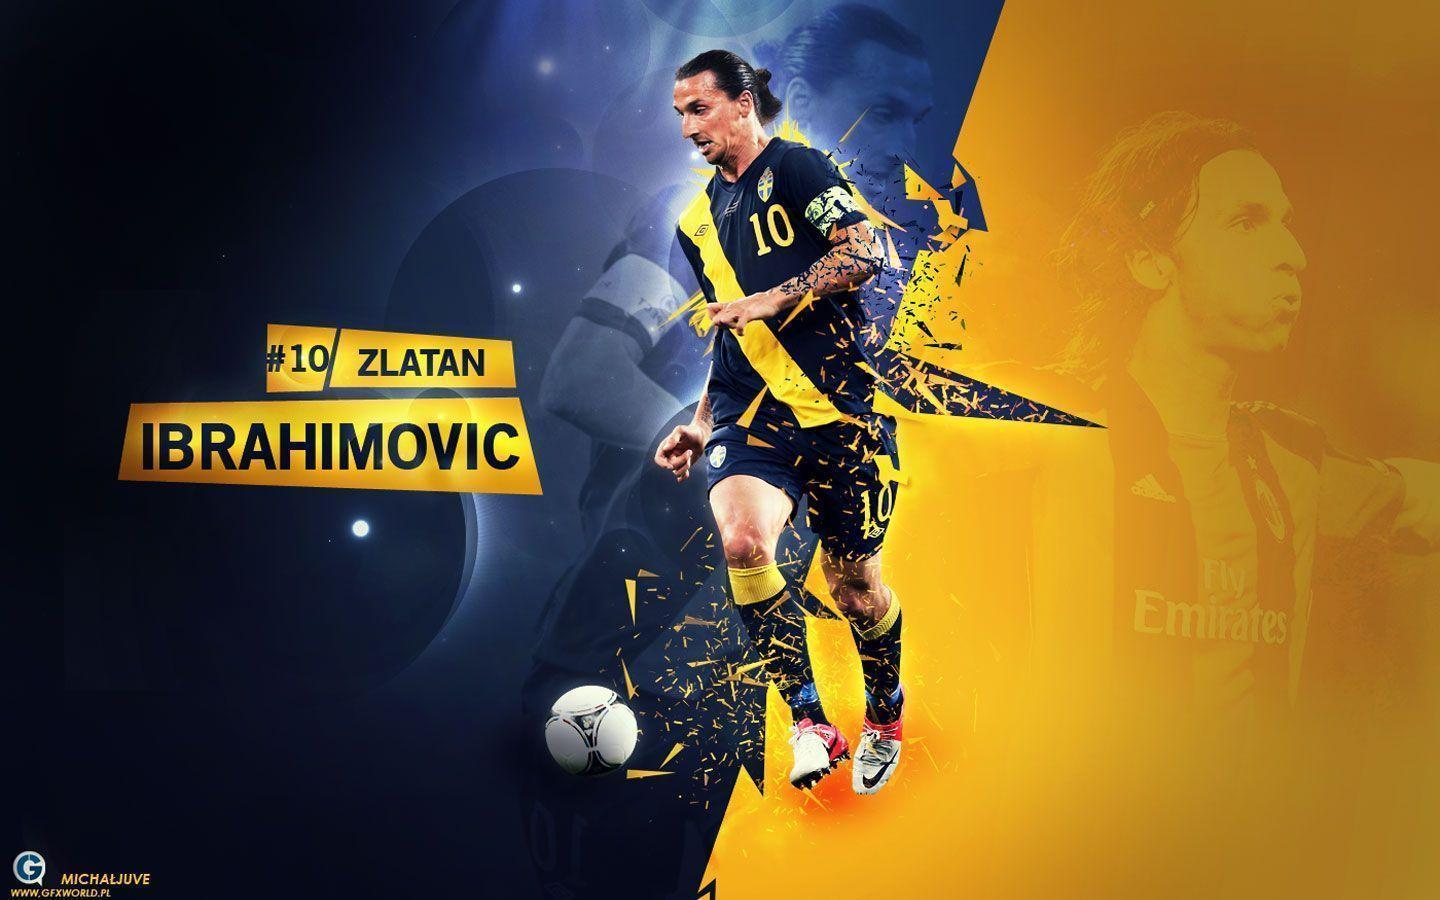 Fonds d&;écran Zlatan Ibrahimovic, tous les wallpaper Zlatan